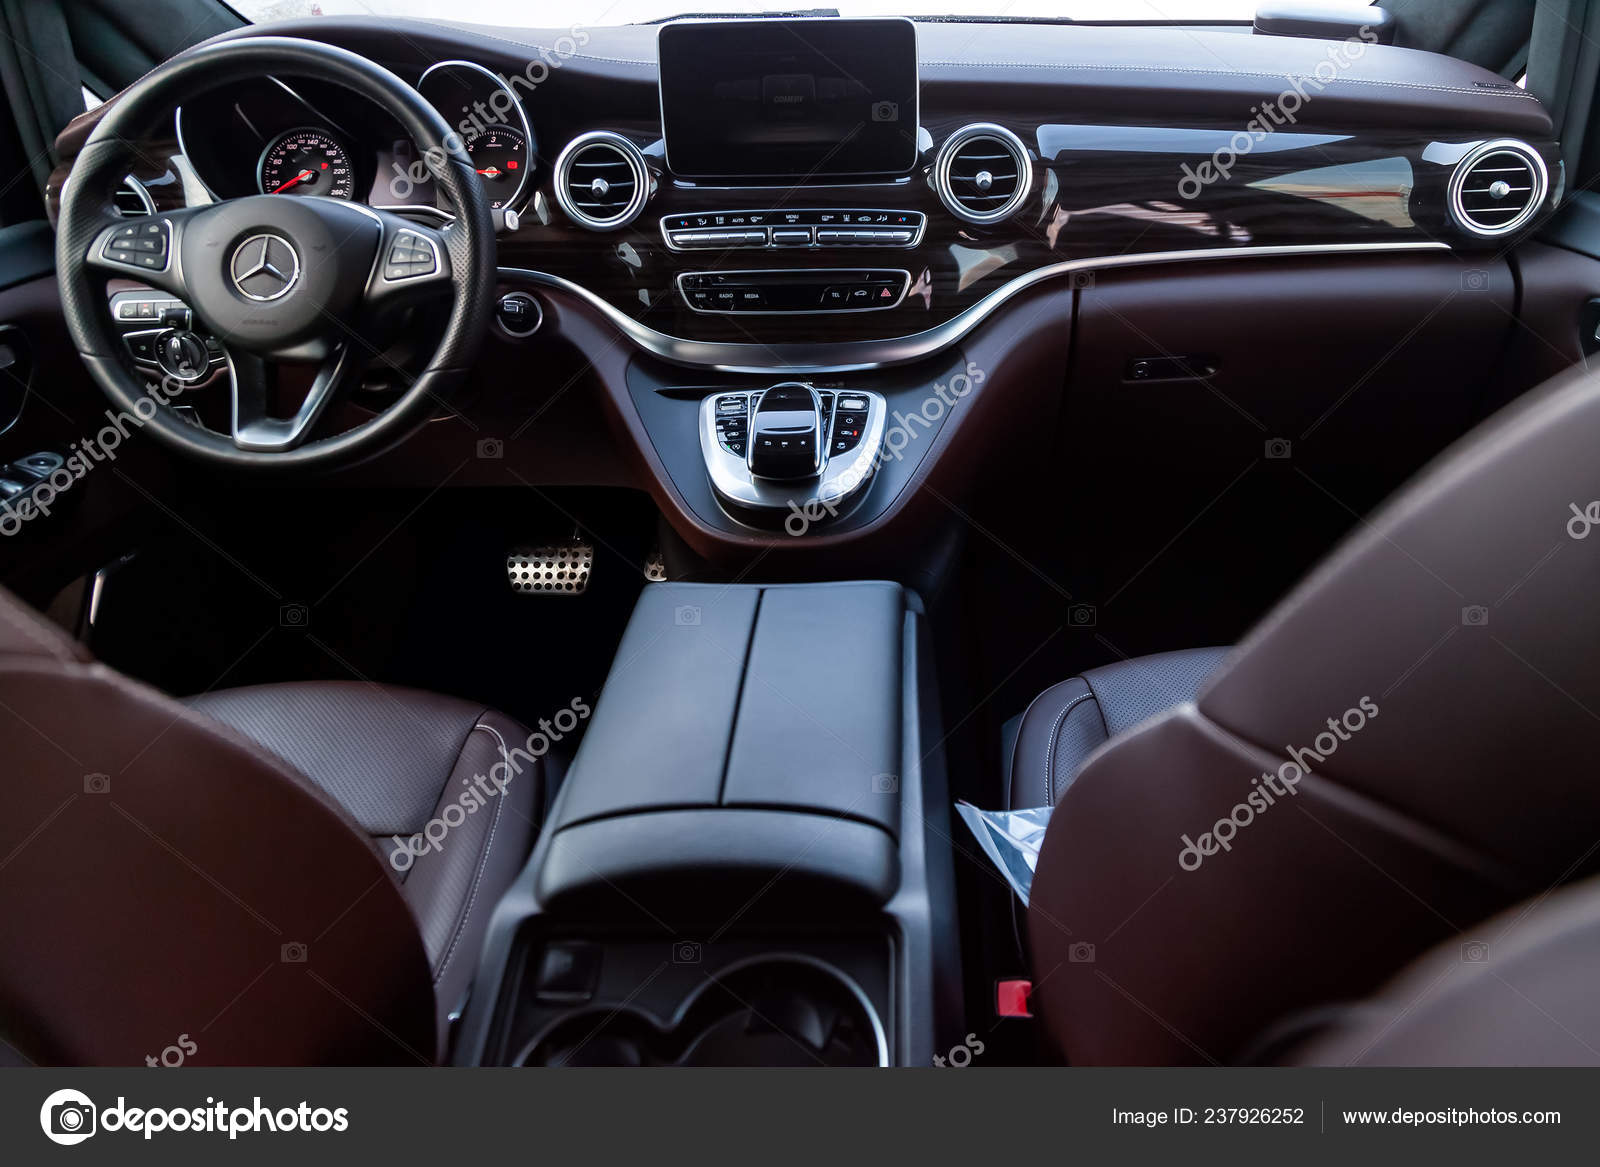 Interior of the Mercedes-Benz Vito Editorial Stock Image - Image